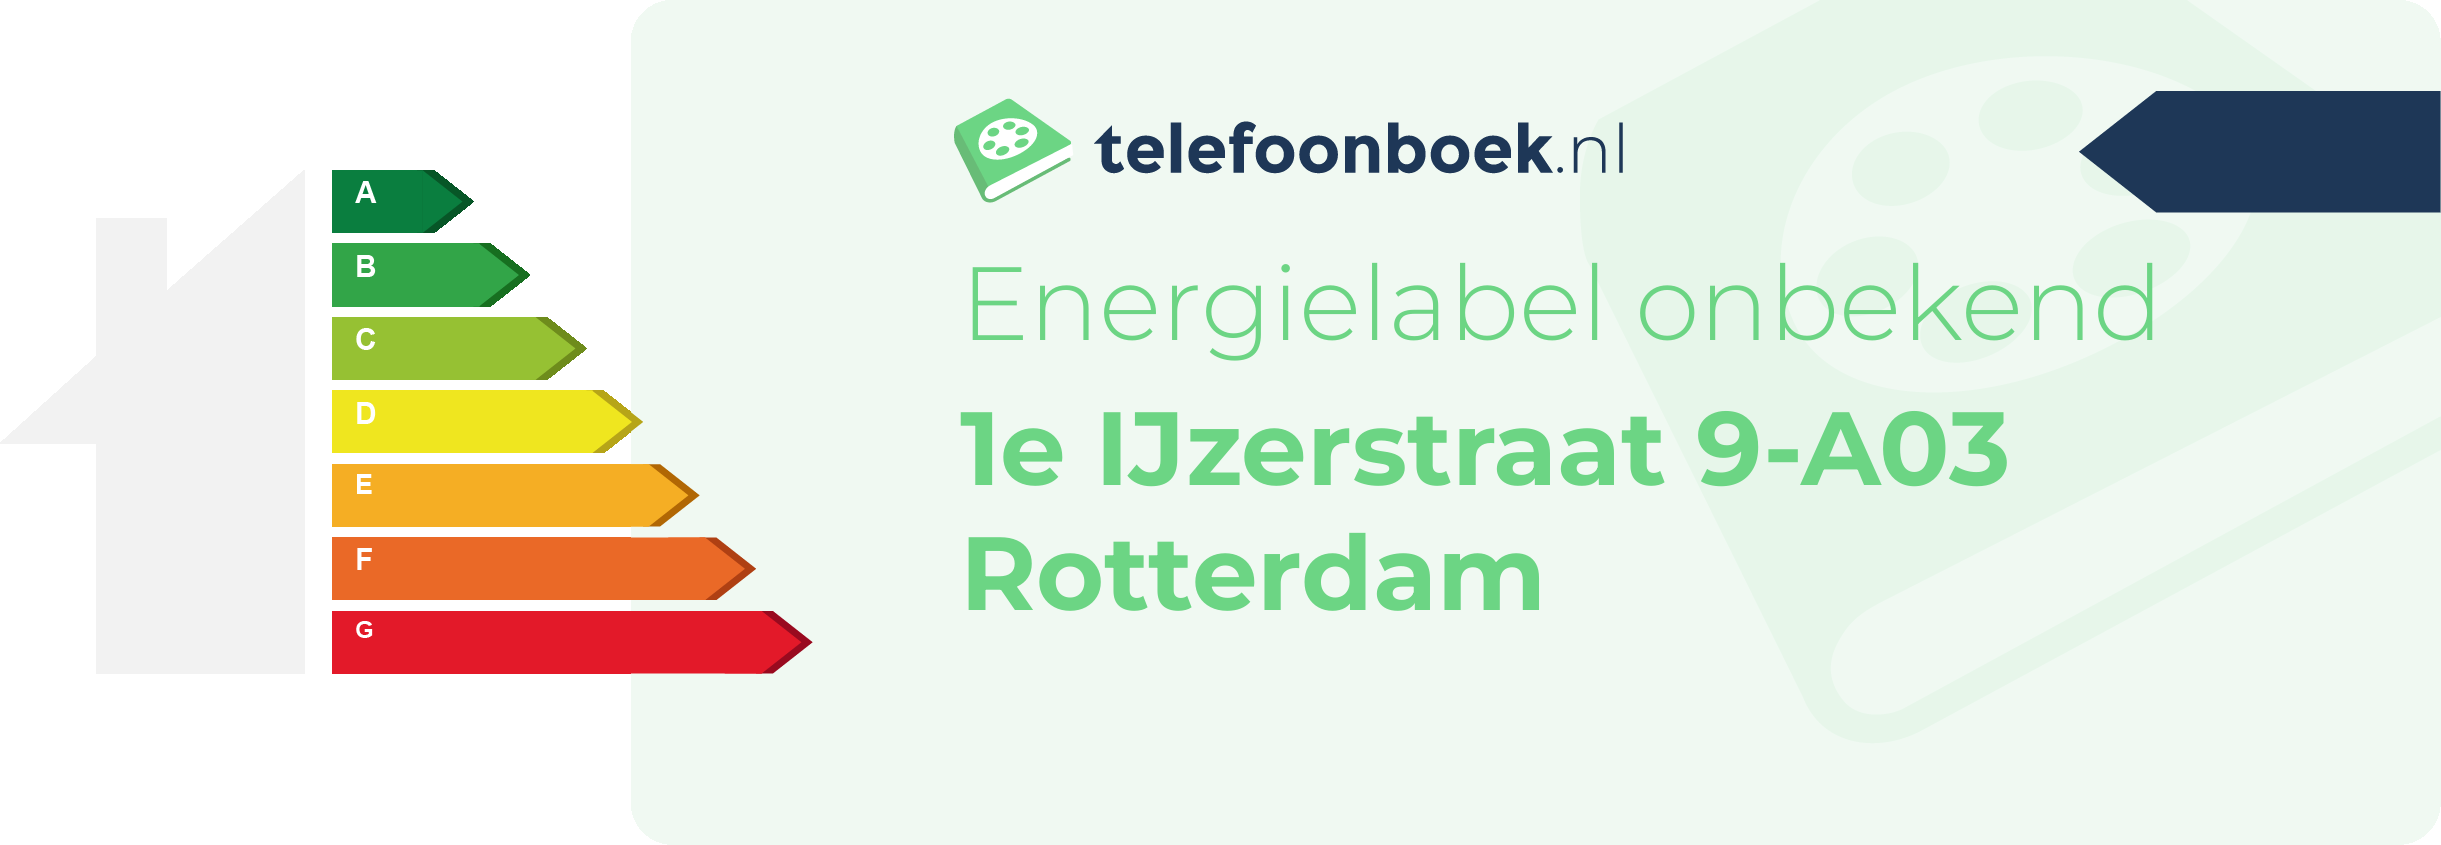 Energielabel 1e IJzerstraat 9-A03 Rotterdam